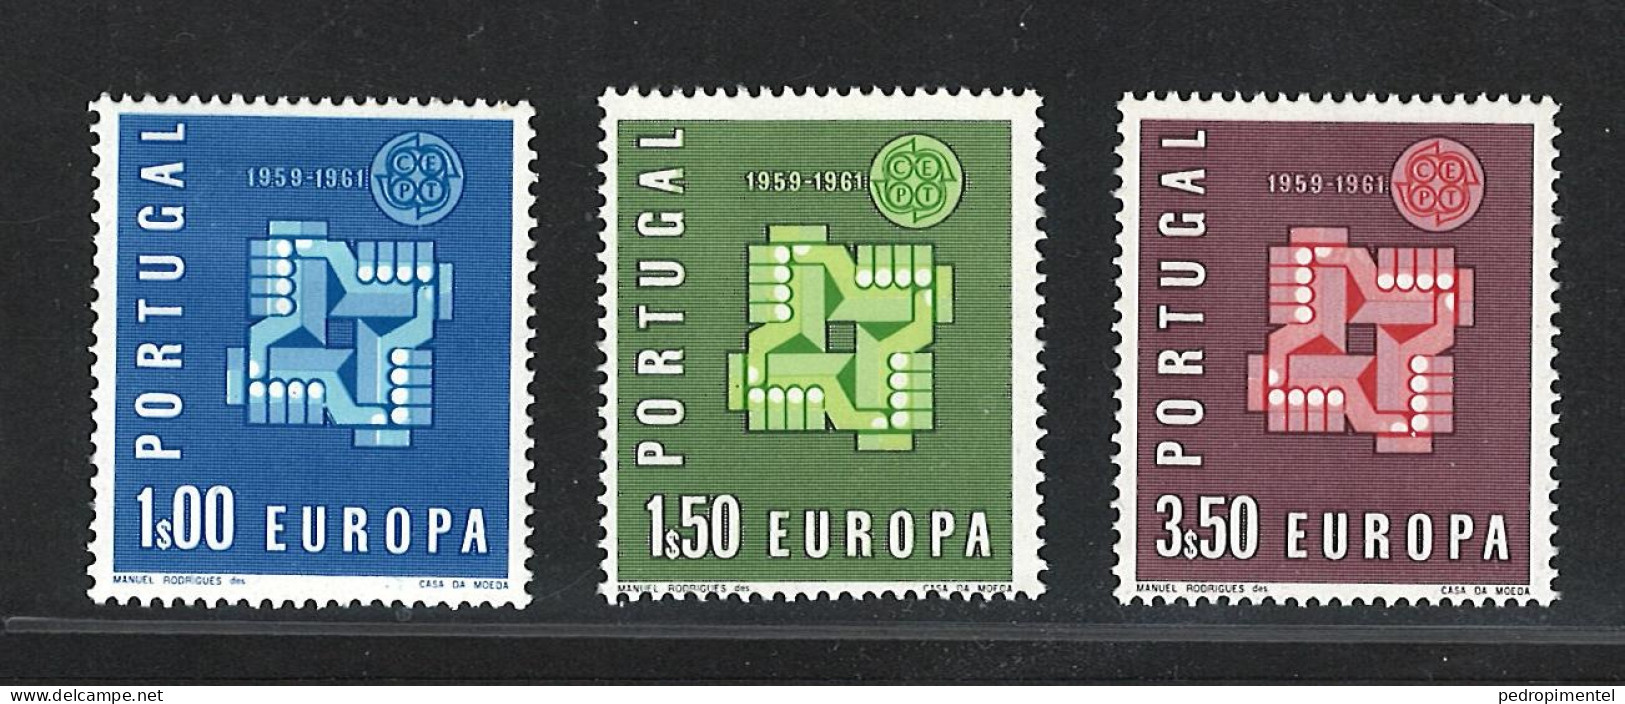 Portugal Stamps 1961 "Europa CEPT" Condition MNH #878-880 - Nuovi